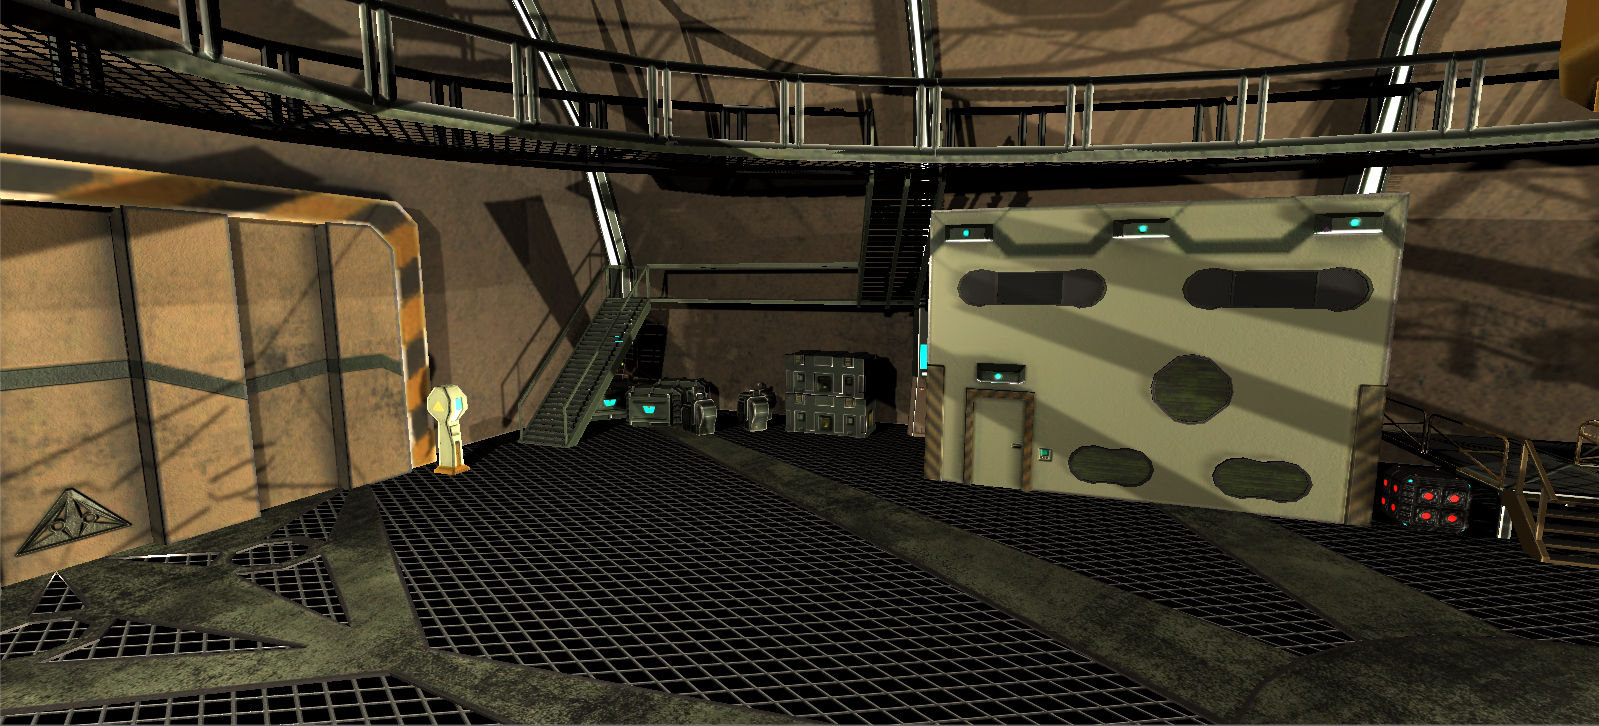 Сцена гаража в Unity в 3d max corona render изображение